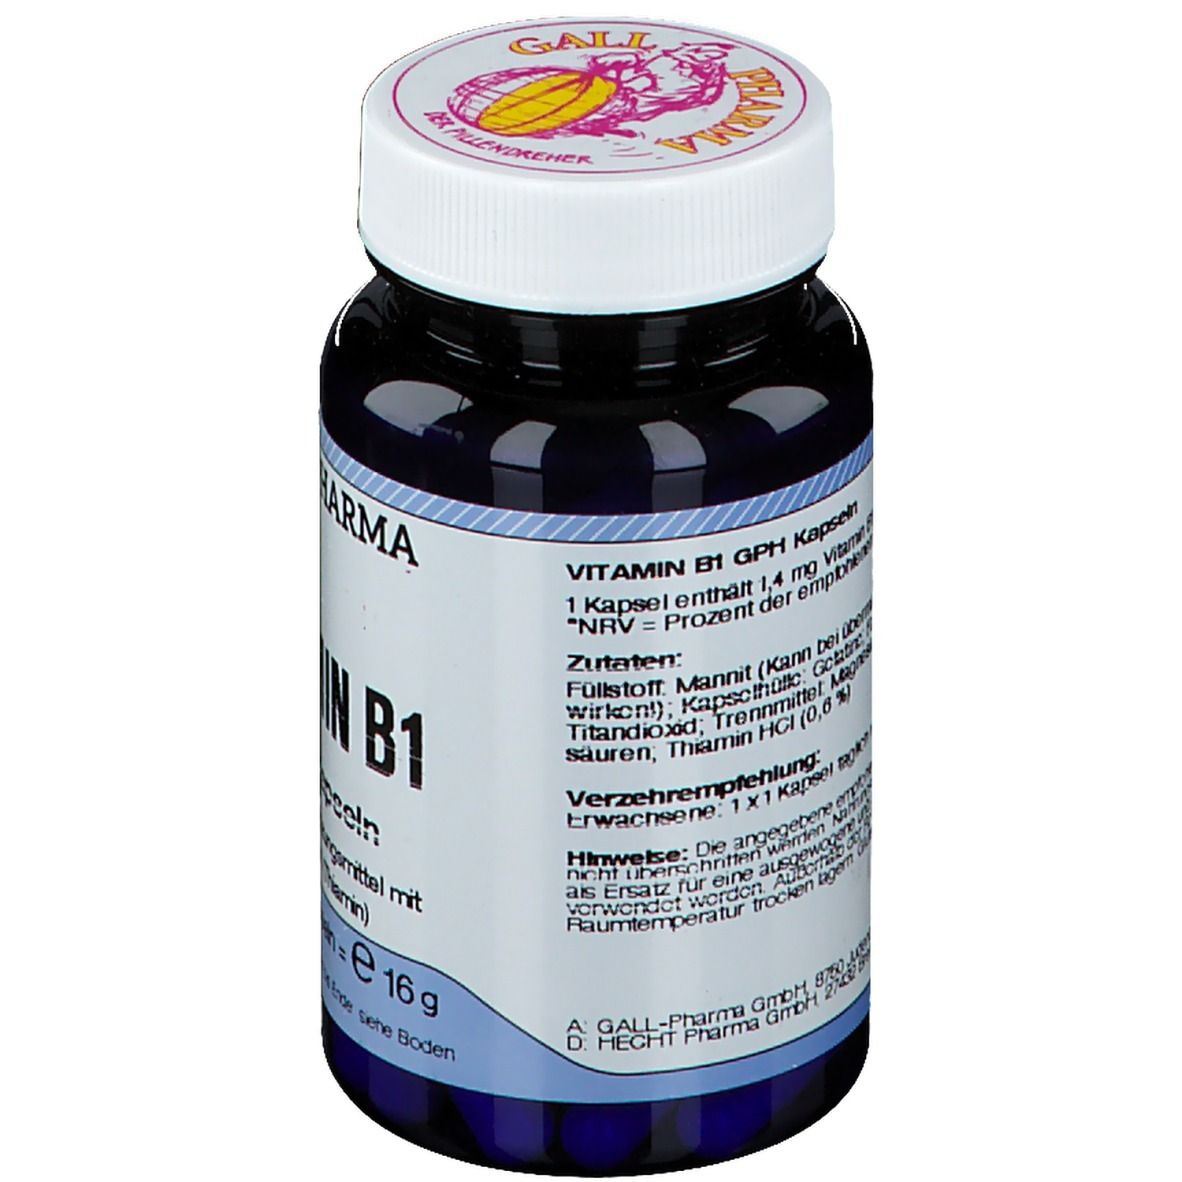 GALL PHARMA Vitamin B1 1,4 mg GPH Kapseln